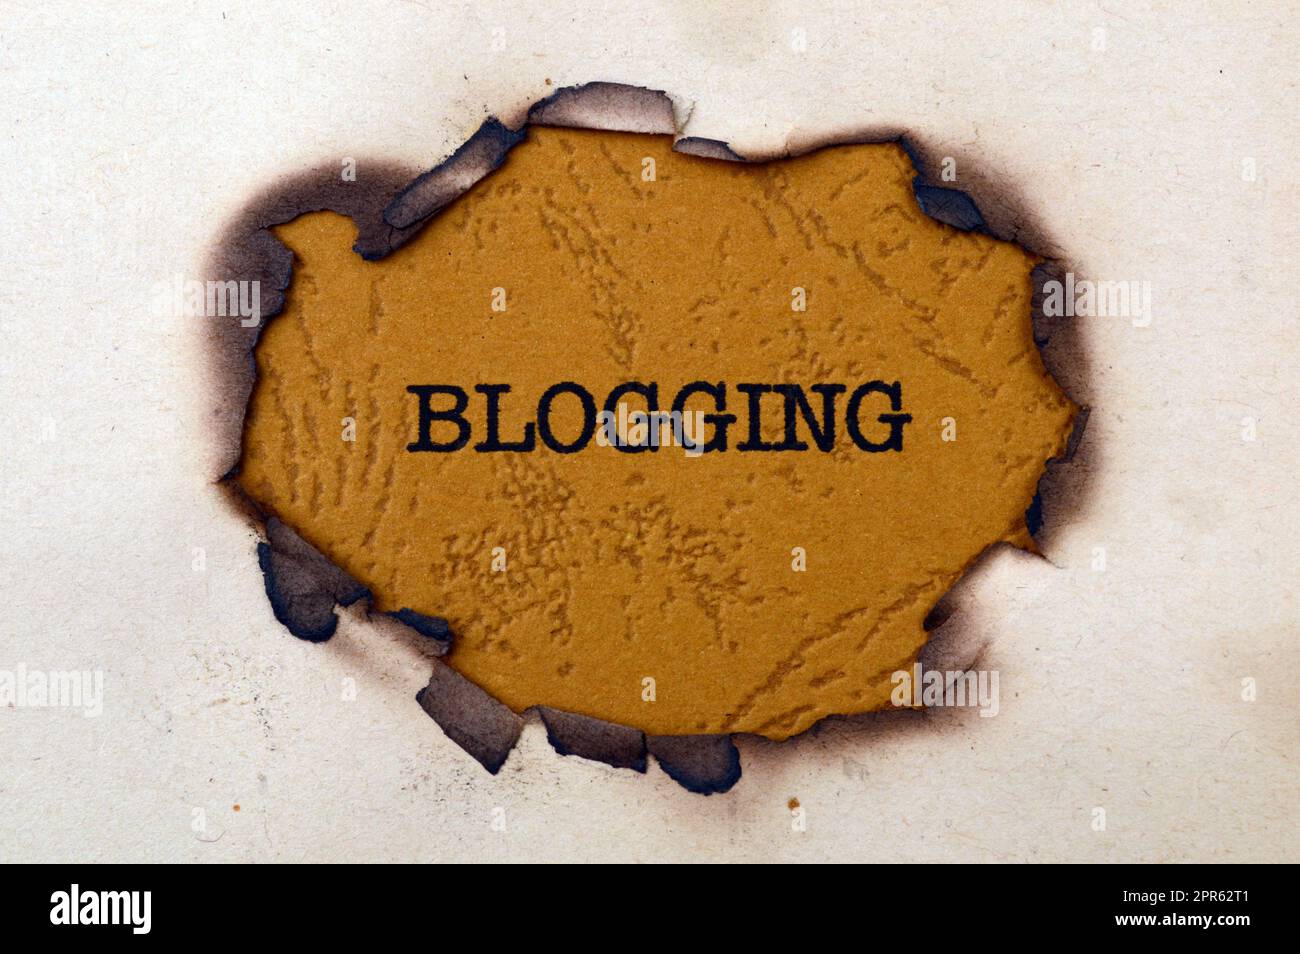 Blogging Stock Photo